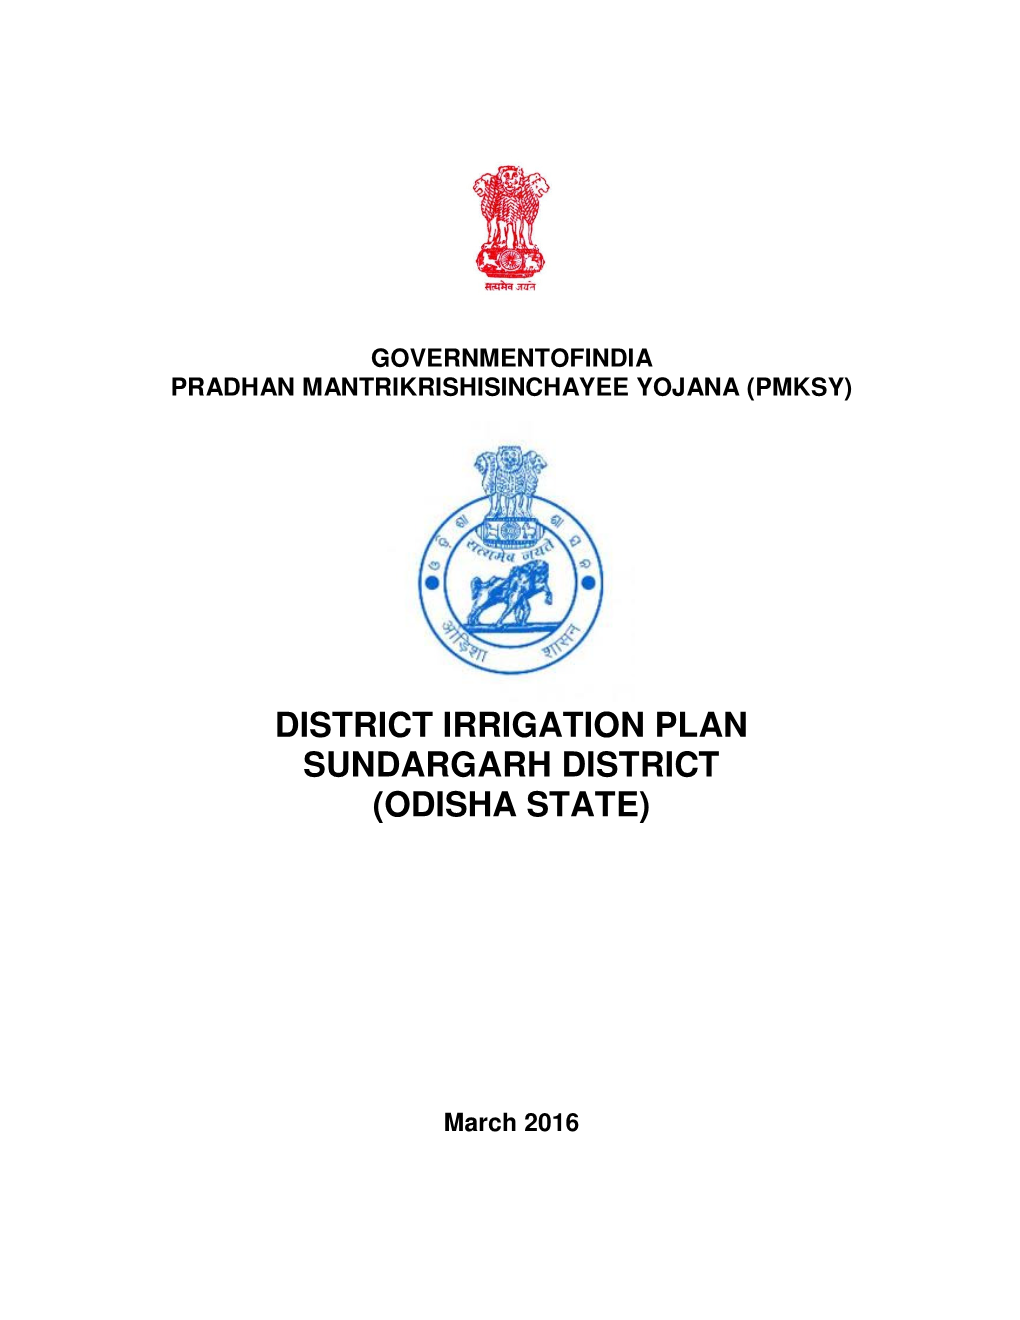 District Irrigation Plan Sundargarh District (Odisha State)